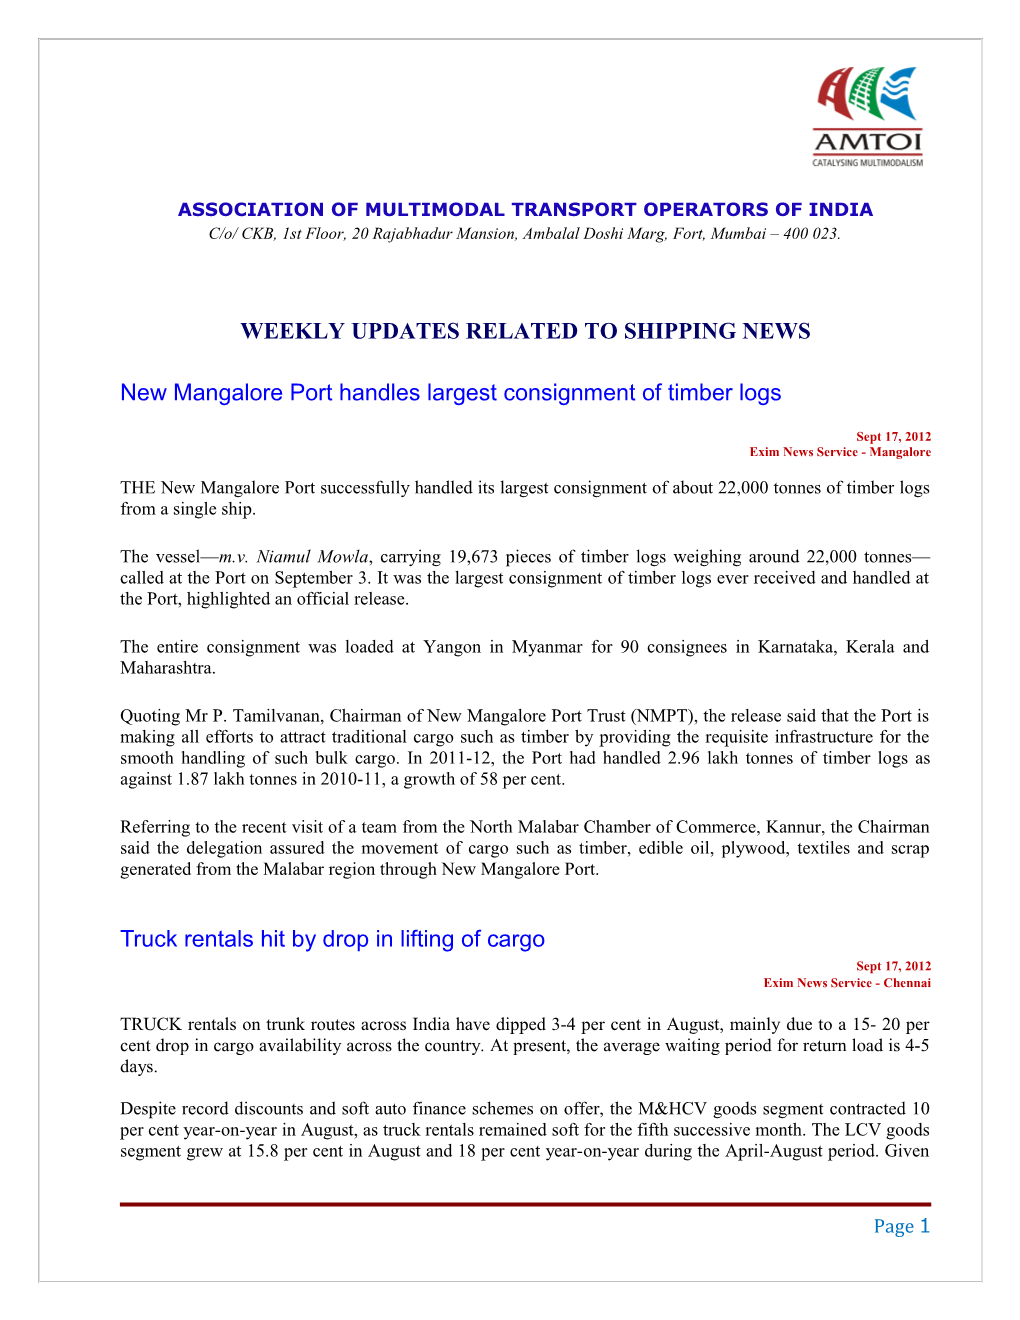 Association of Multimodal Transport Operators of India